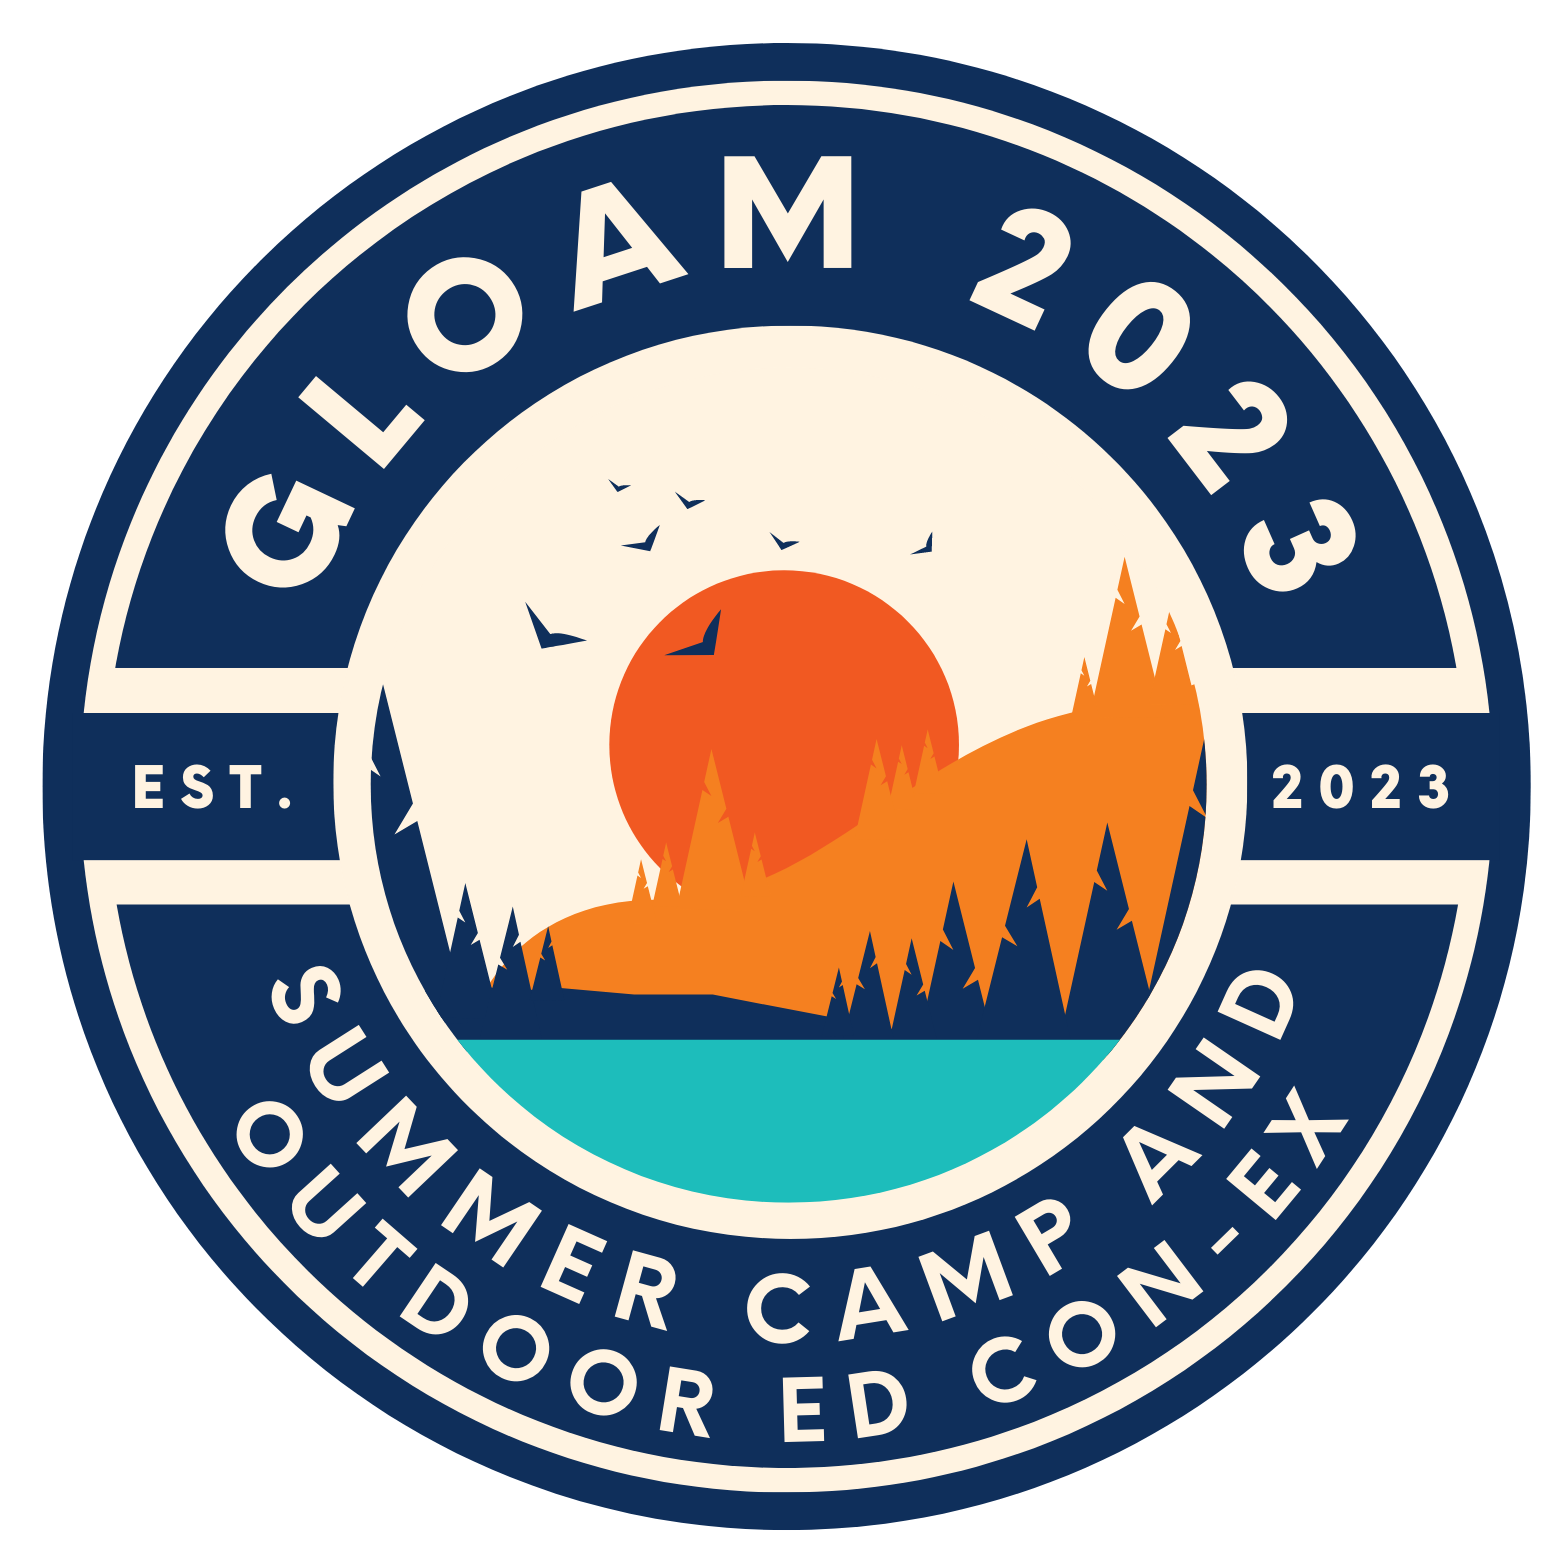 Gloam 2023